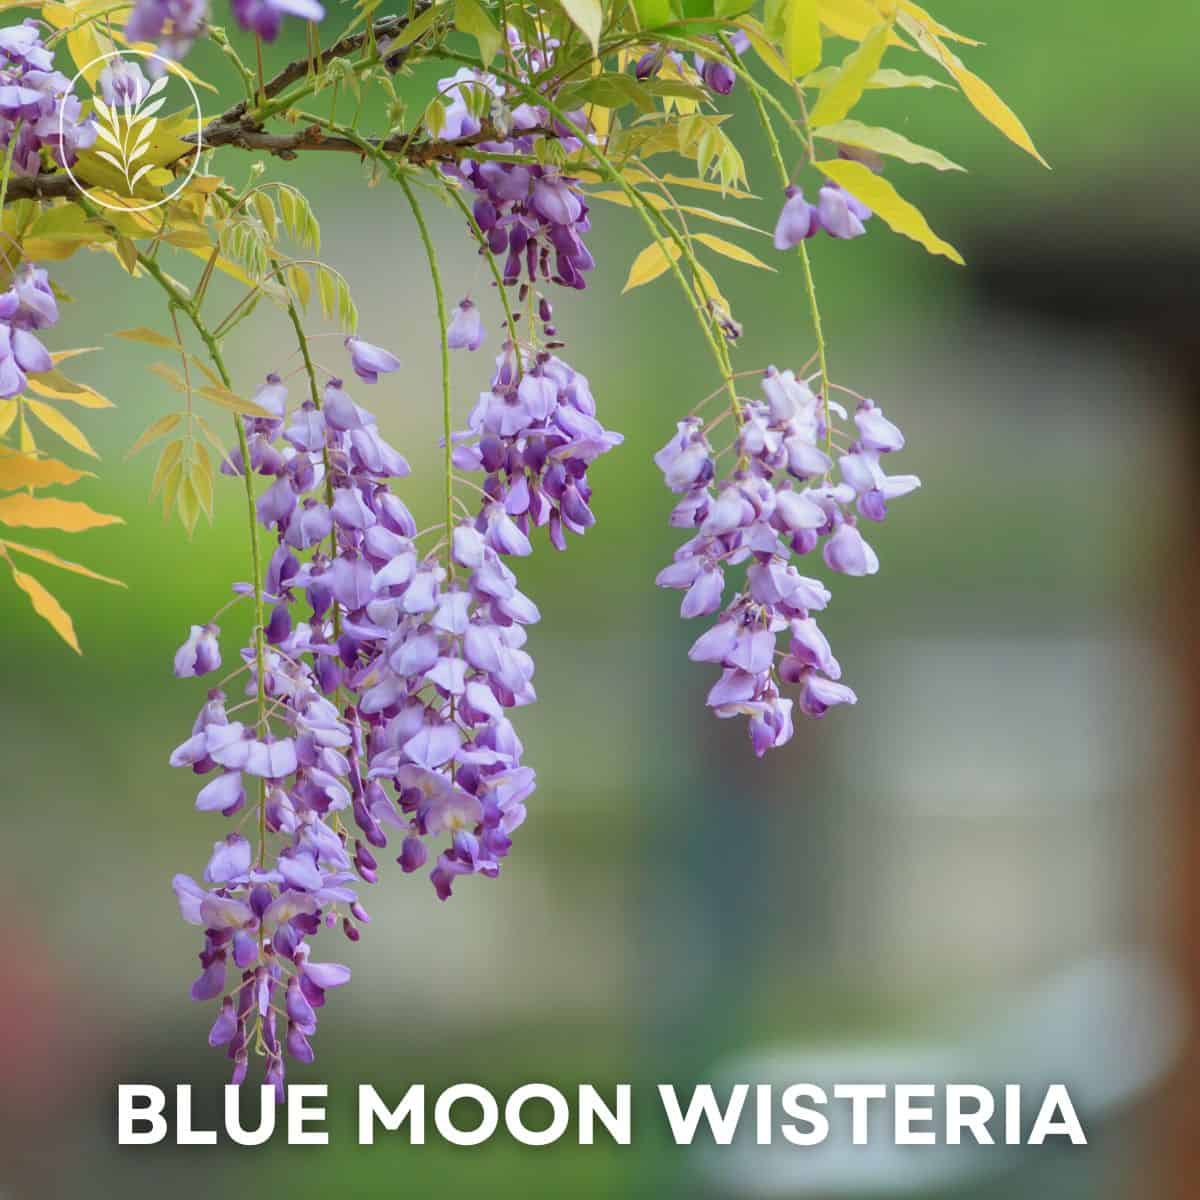 Blue moon wisteria via @home4theharvest